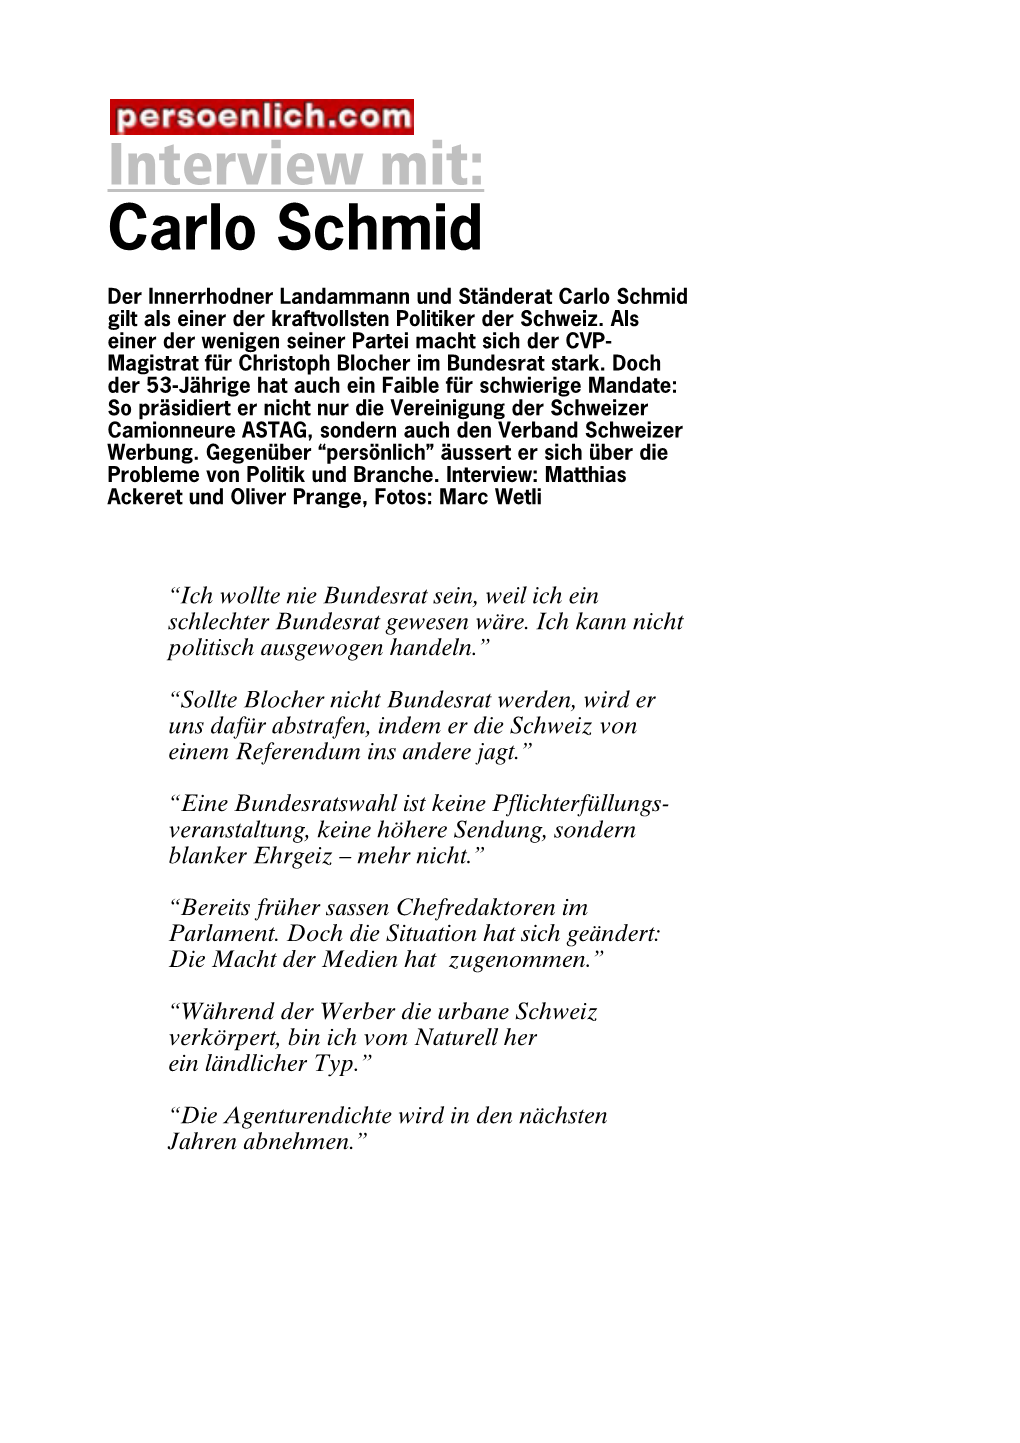 Carlo Schmid